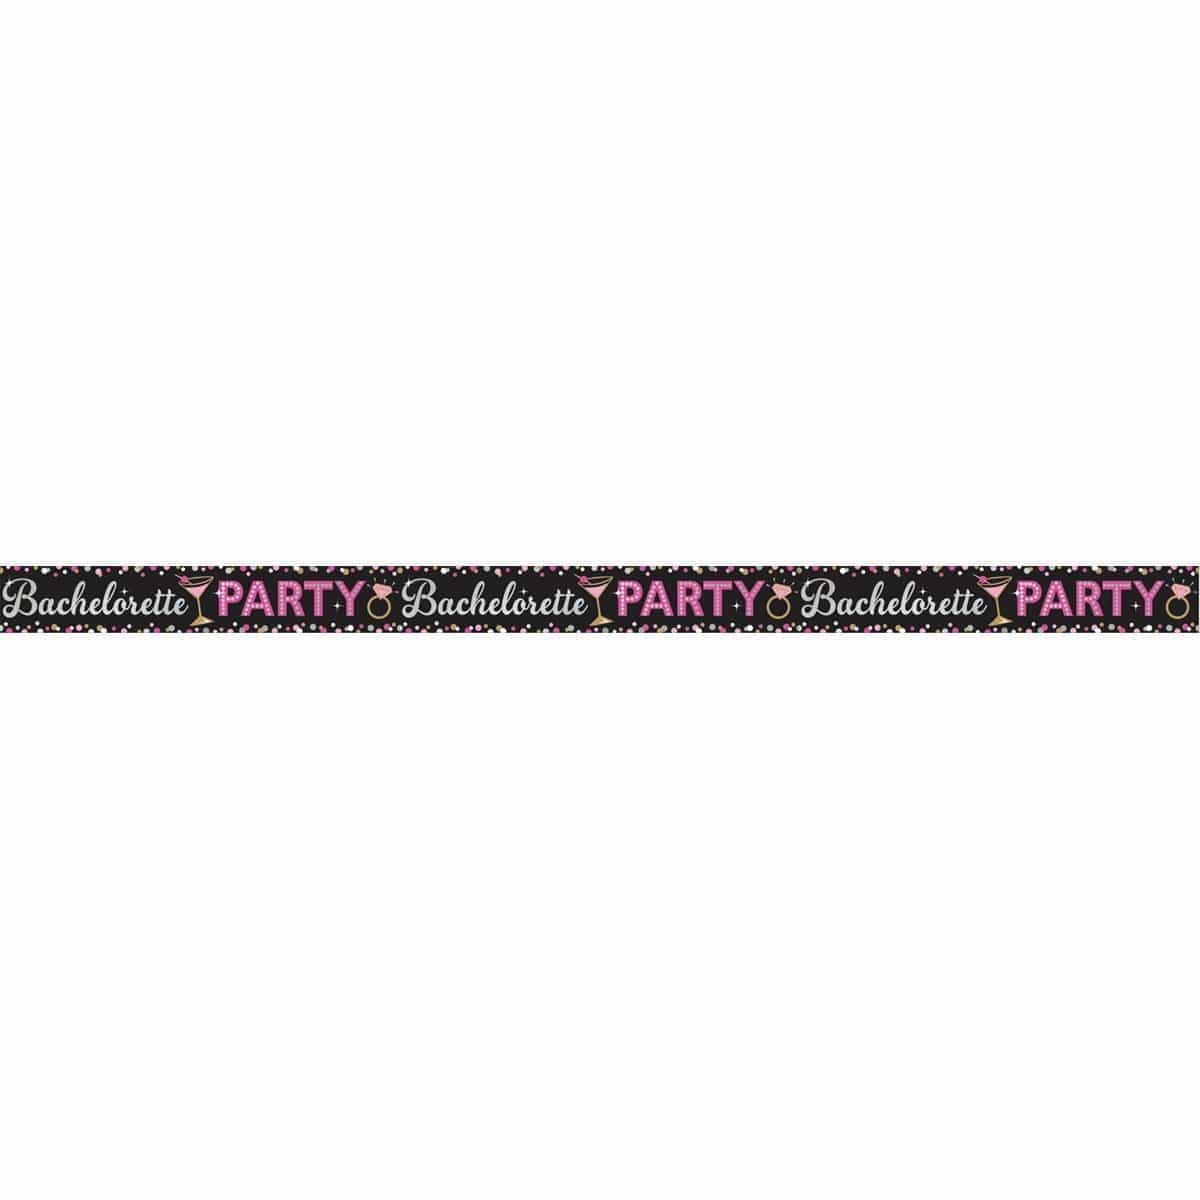 Buy Bachelorette Sassy Bride foil banner, 25 feet sold at Party Expert